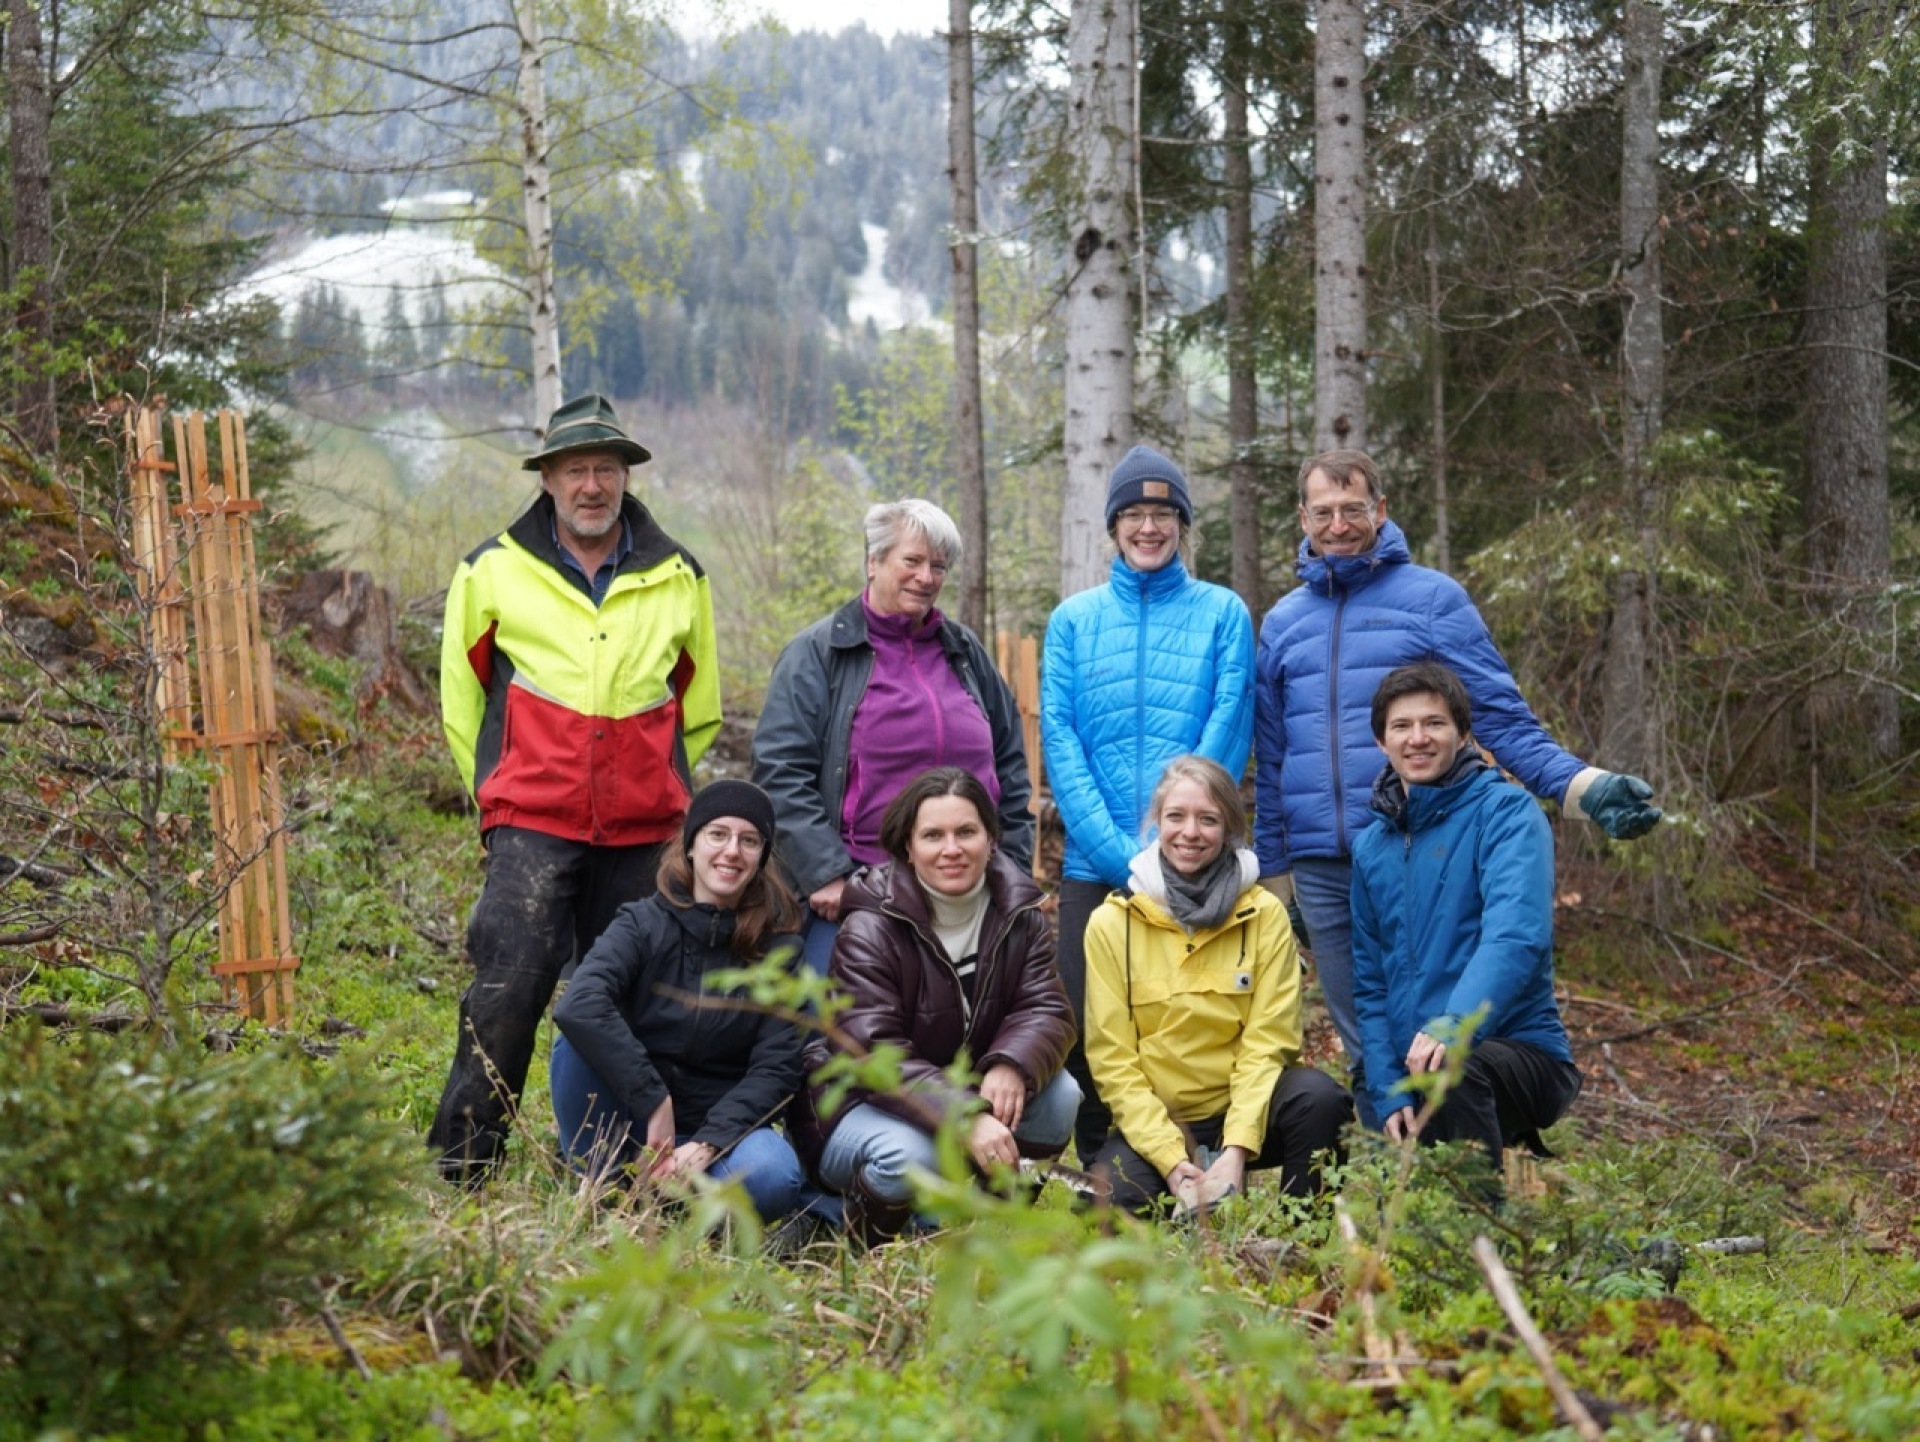 The Menuhin tree-planting team: (back row, from left) forester Daniel Bütschi, Beatrice Frautschi, Seraina Jung, Christoph Müller, (front row, from left) Jasmin Teuscher, Christine von Siebenthal, Arina Kropf and Lukas Wittermann.